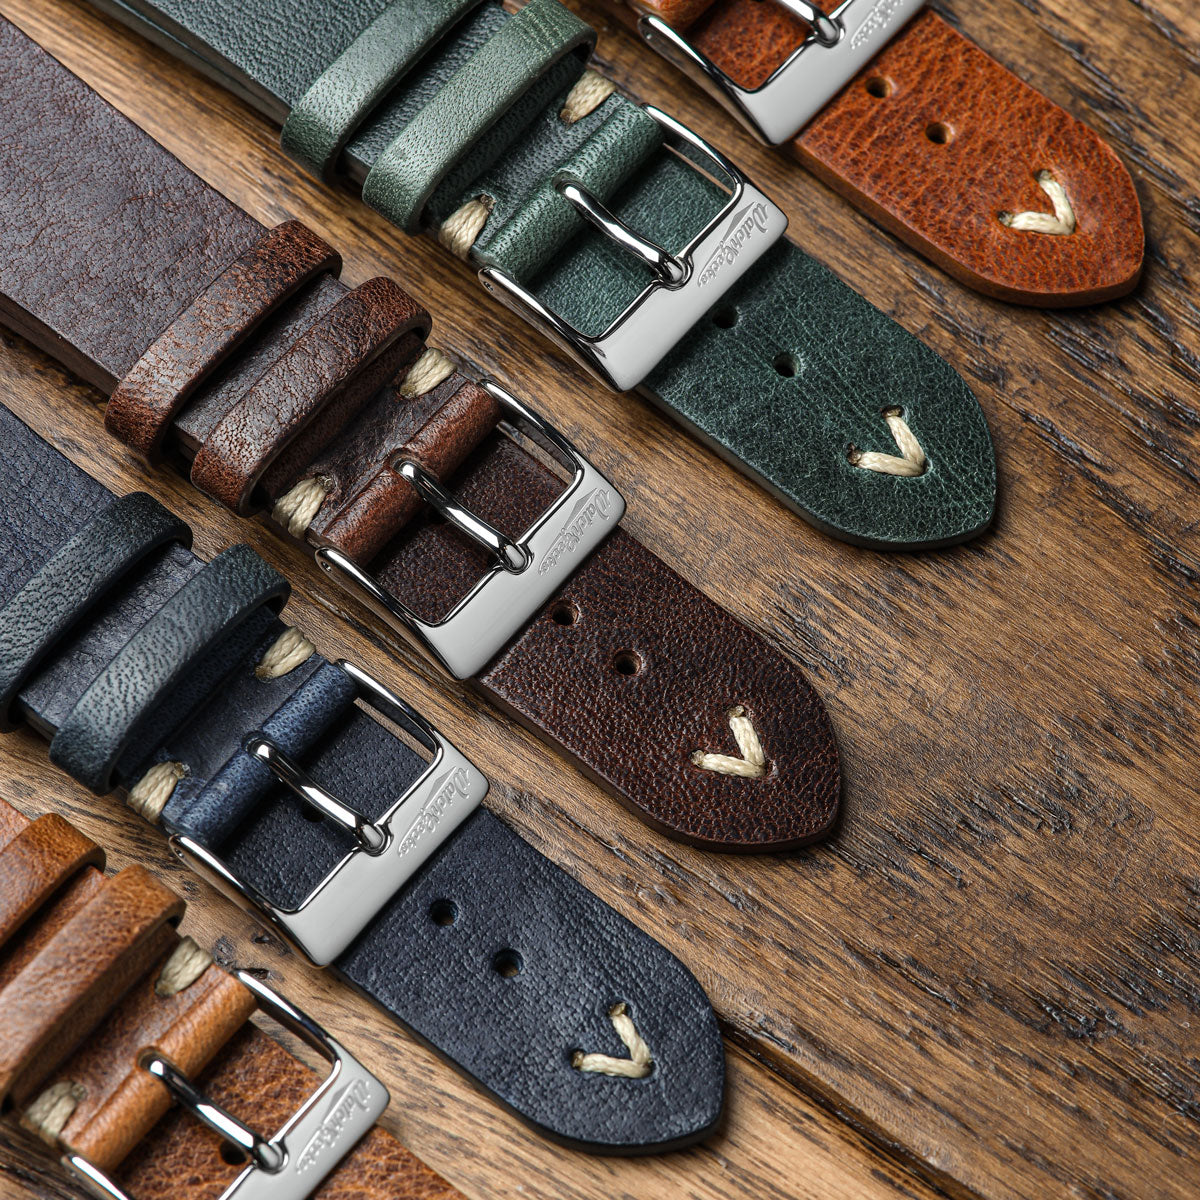 Classic Simple Handmade Italian Leather Watch Strap - Reddish Brown